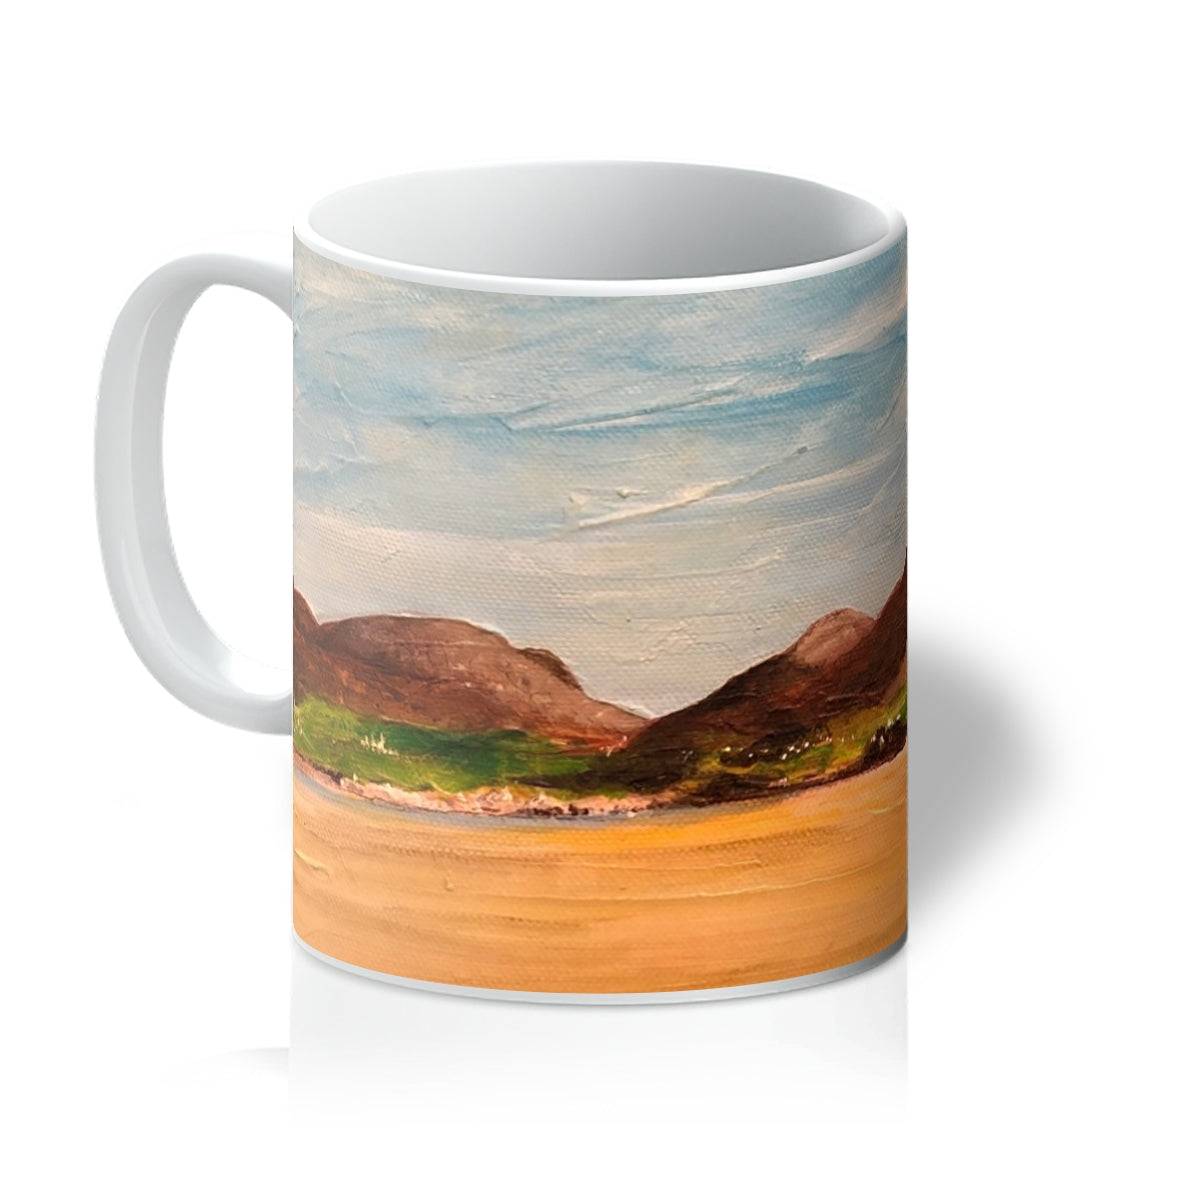 Uig Sands Lewis Art Gifts Mug-Mugs-Hebridean Islands Art Gallery-11oz-White-Paintings, Prints, Homeware, Art Gifts From Scotland By Scottish Artist Kevin Hunter